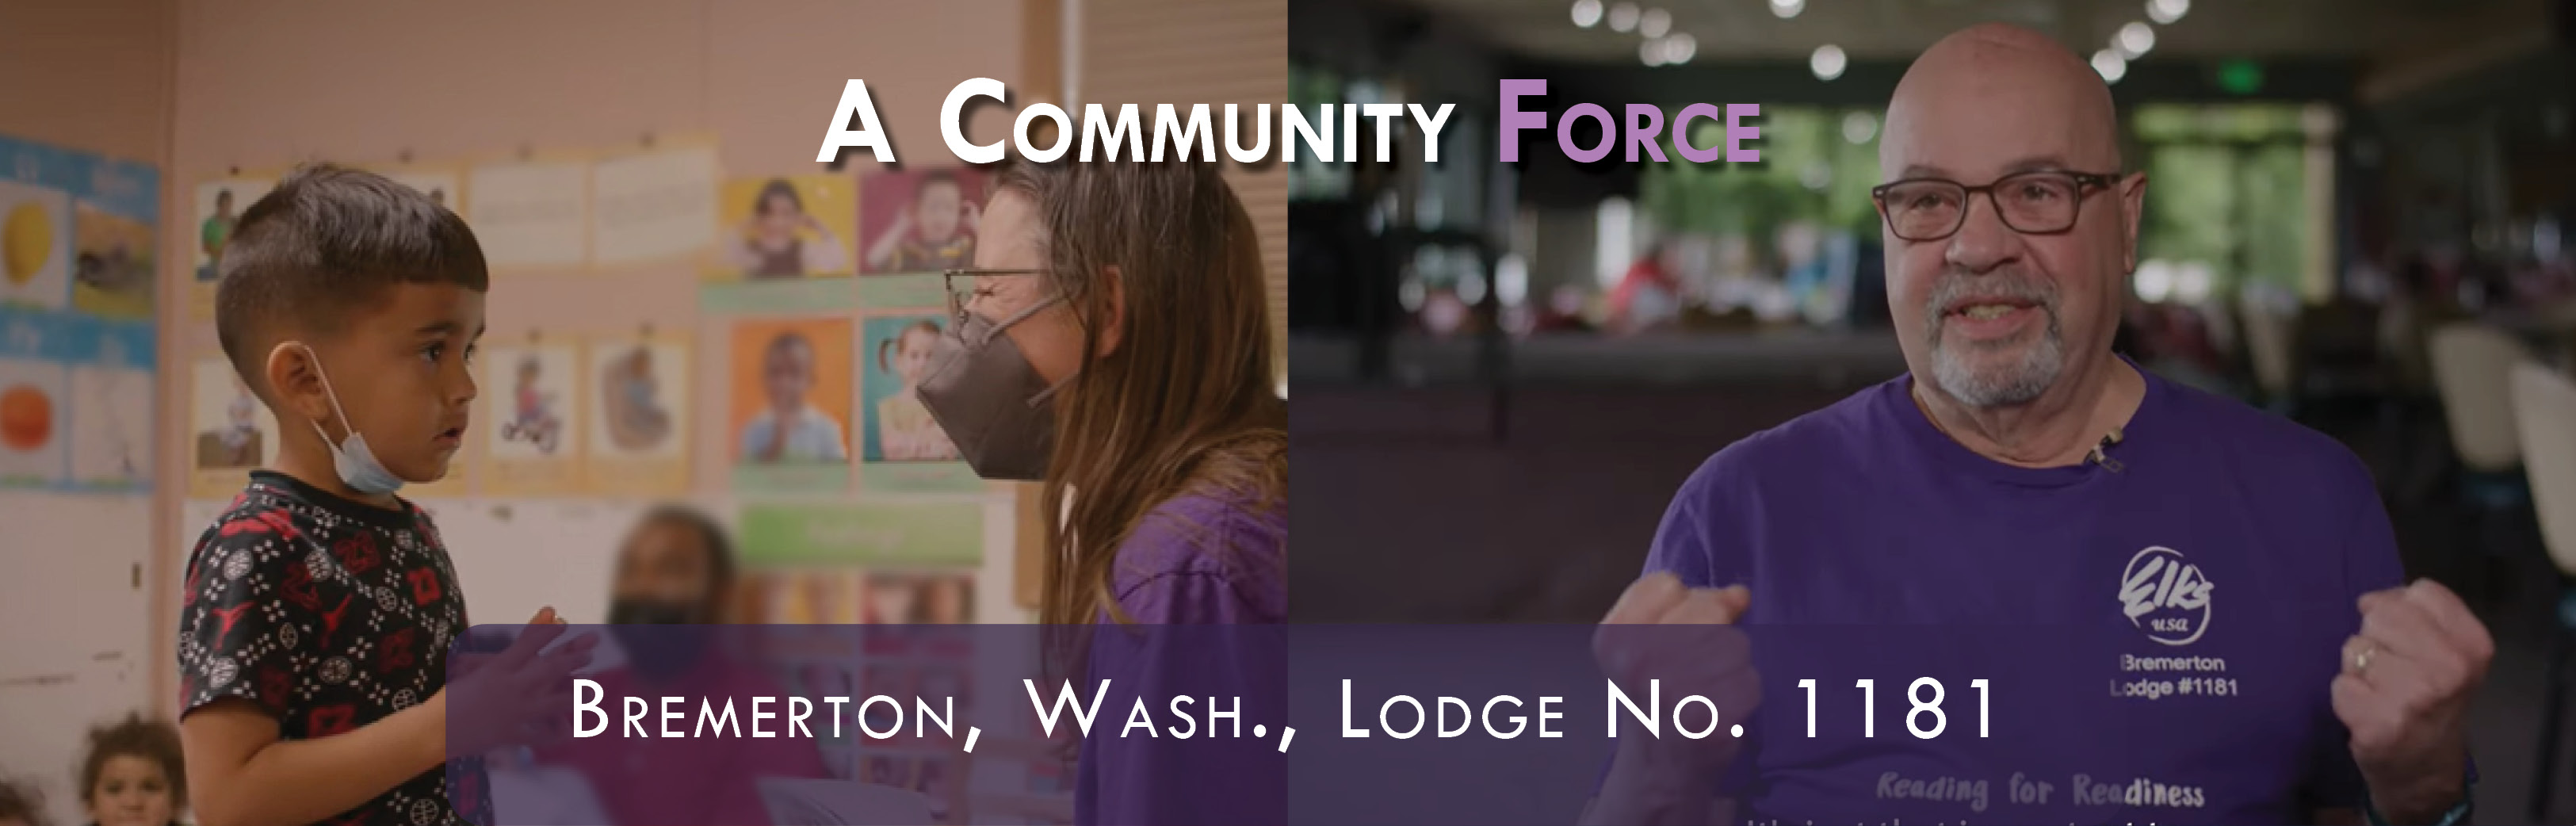 Bremerton, Washington: A Community Force